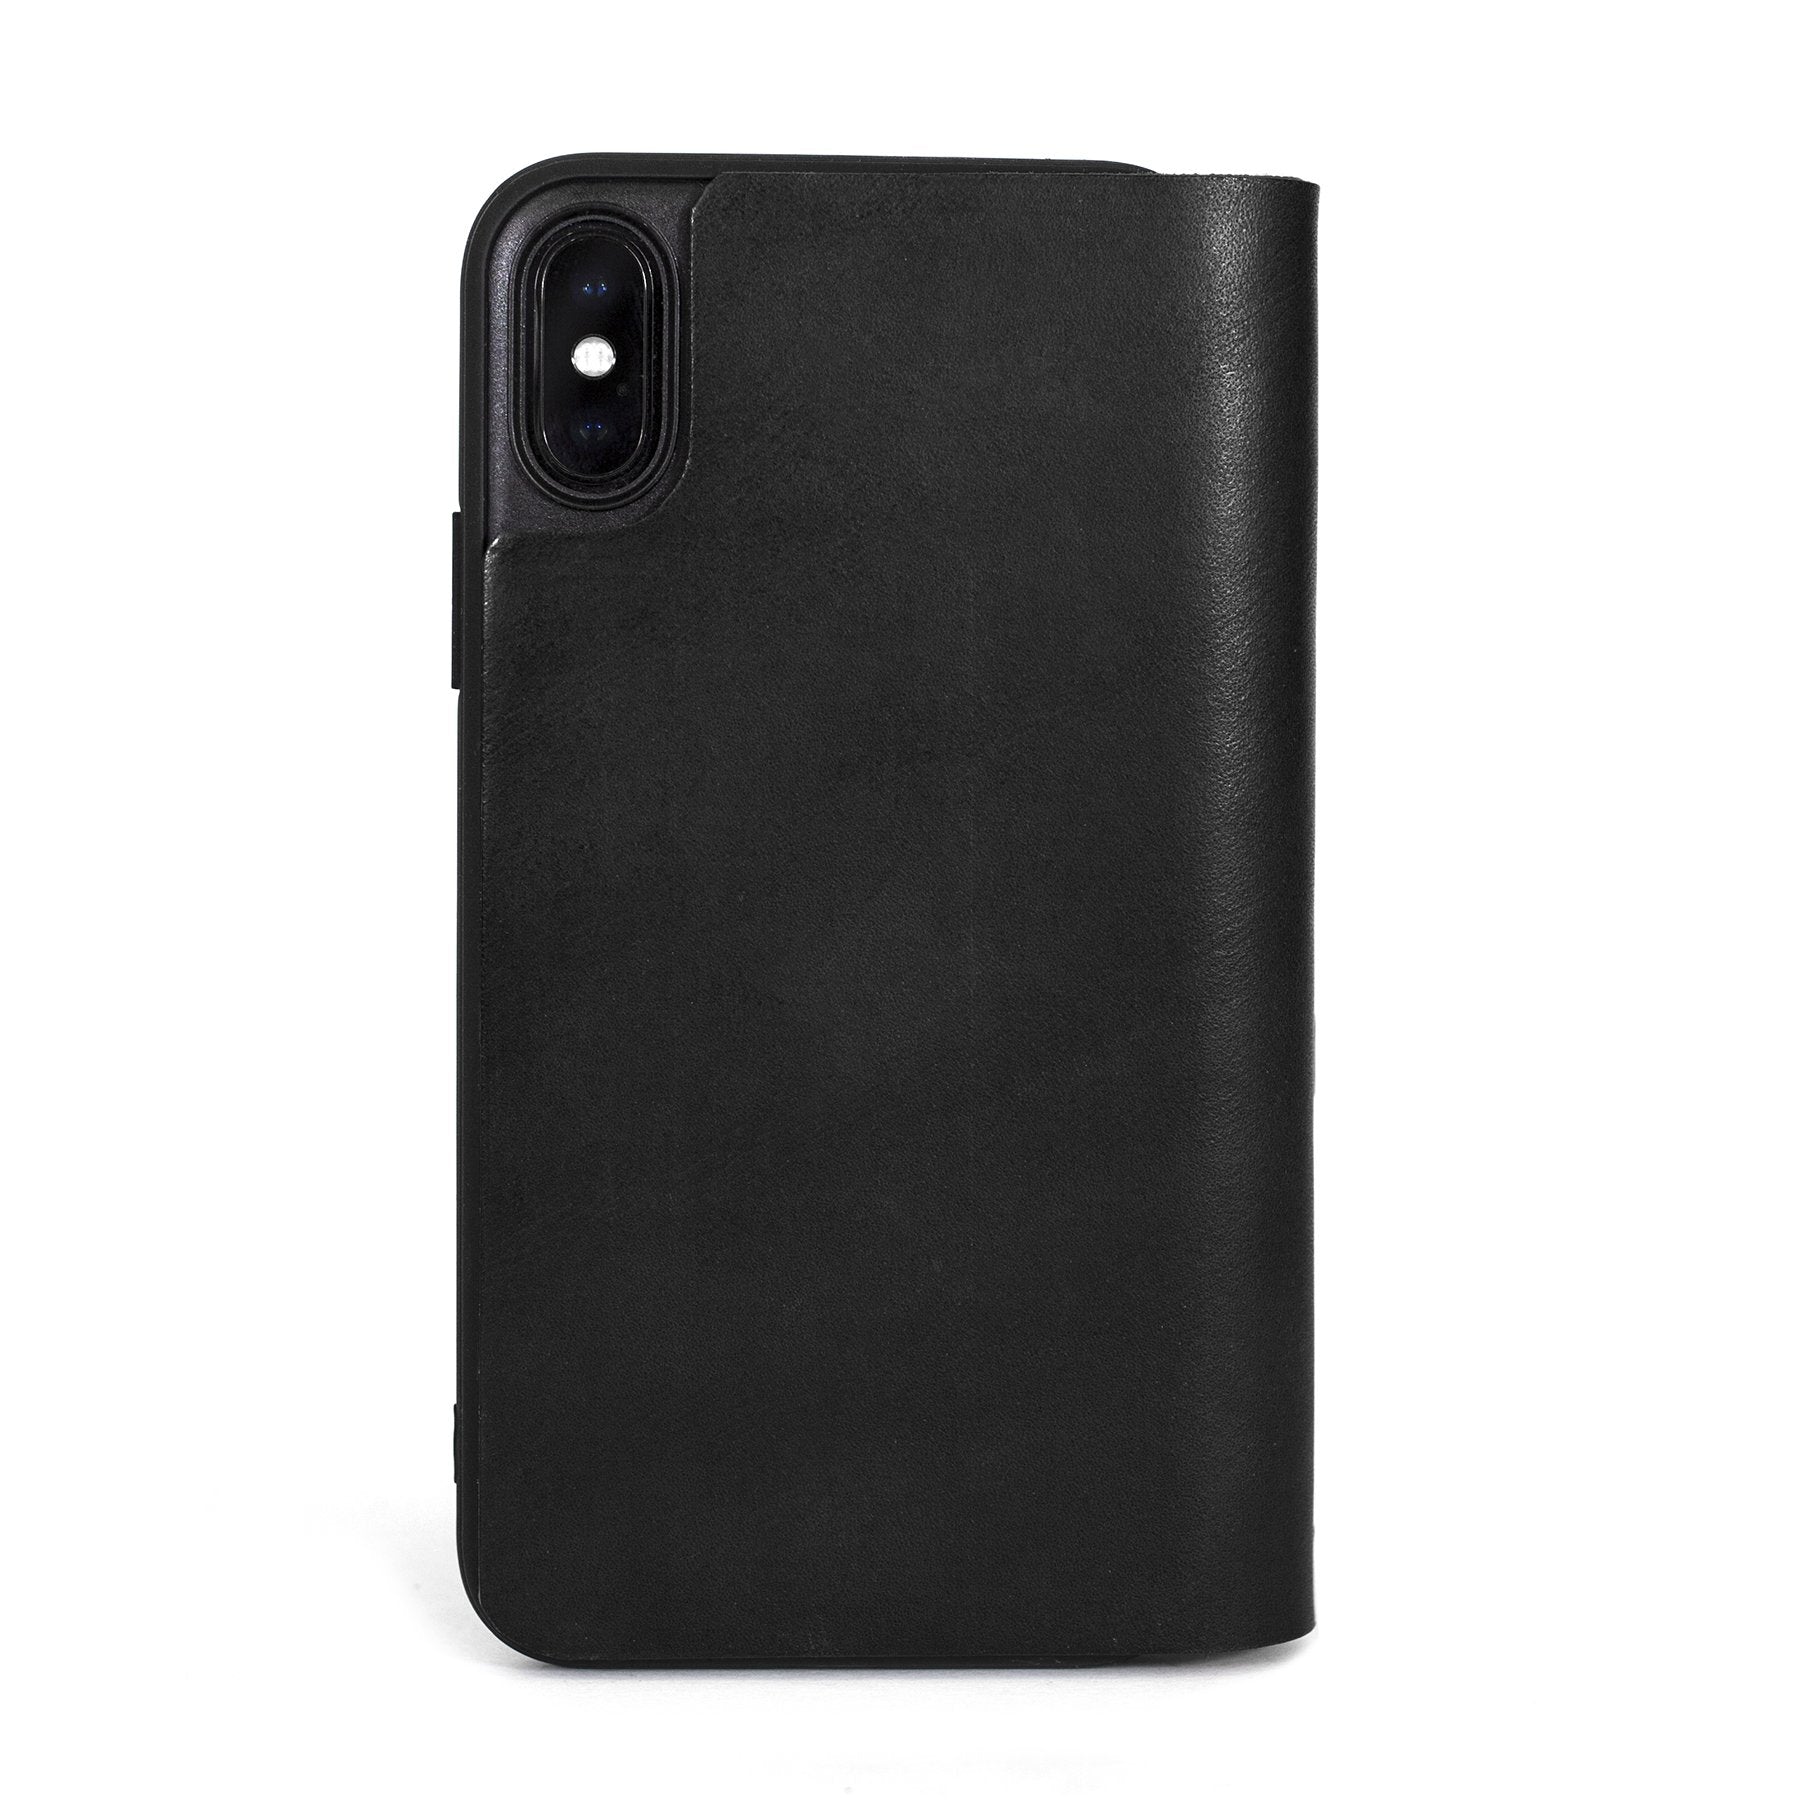 theGOODbook iPhone Wallet - Black